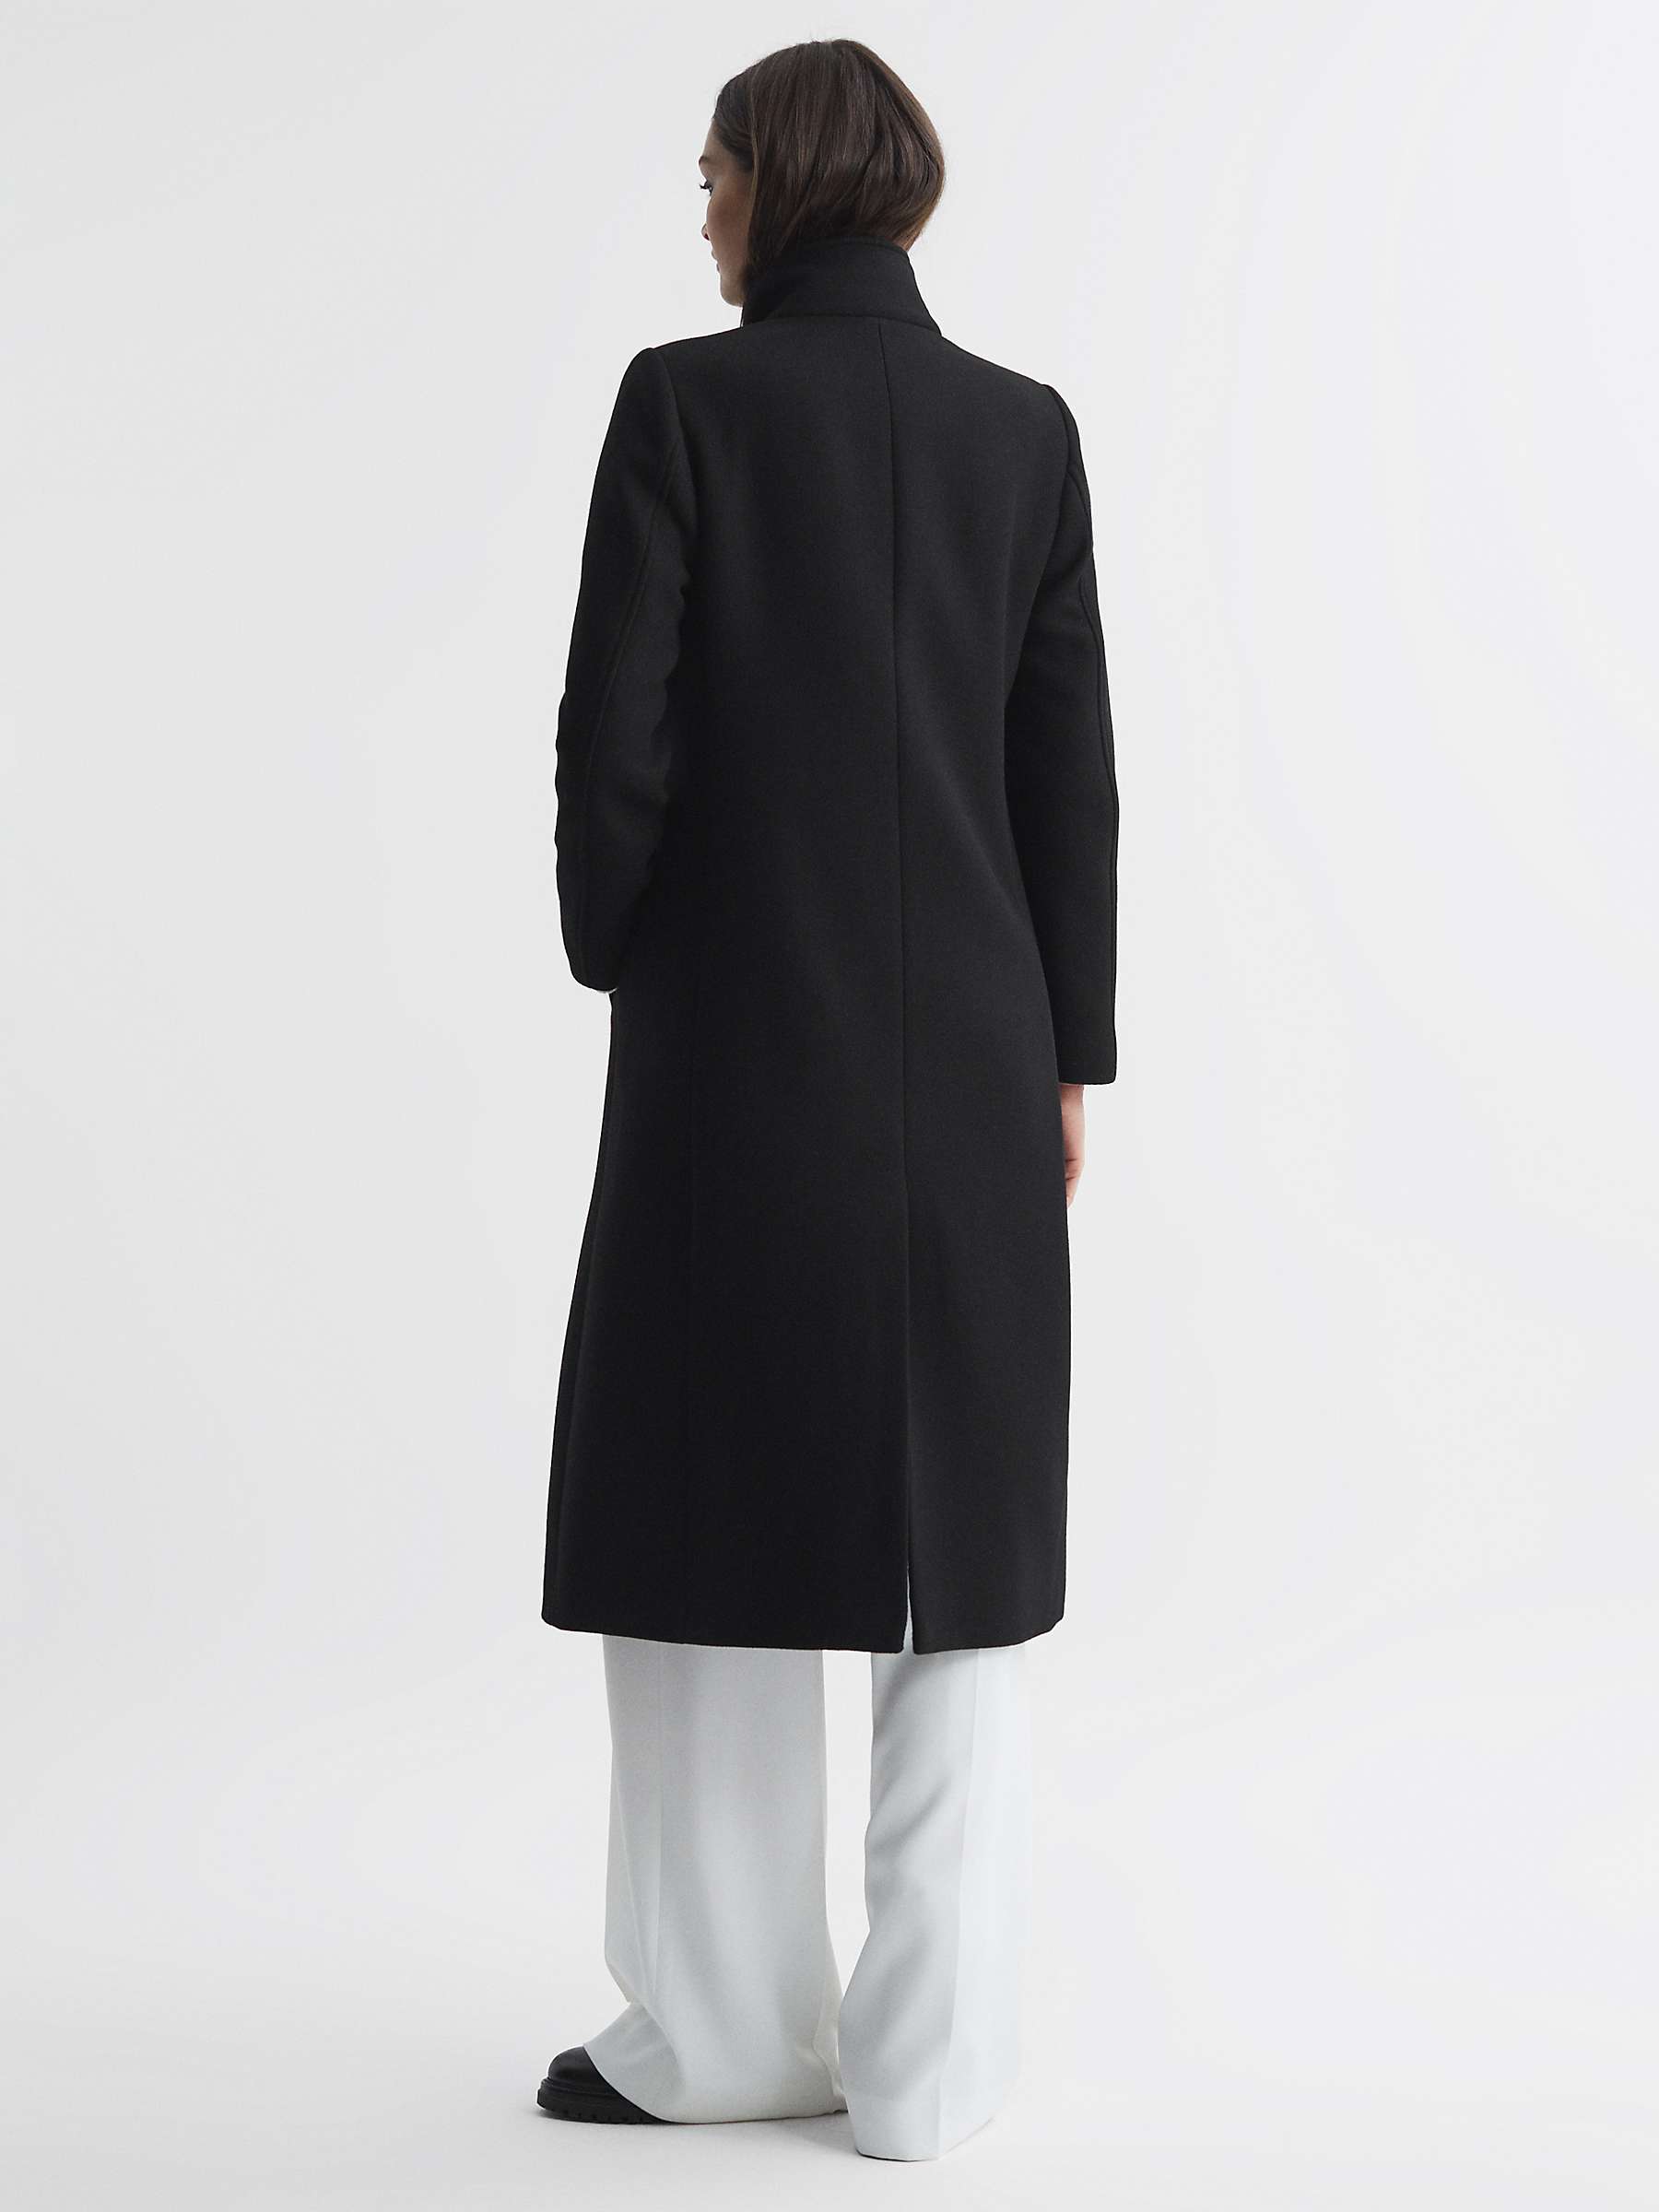 Reiss Blair Wool Blend Coat, Black at John Lewis & Partners